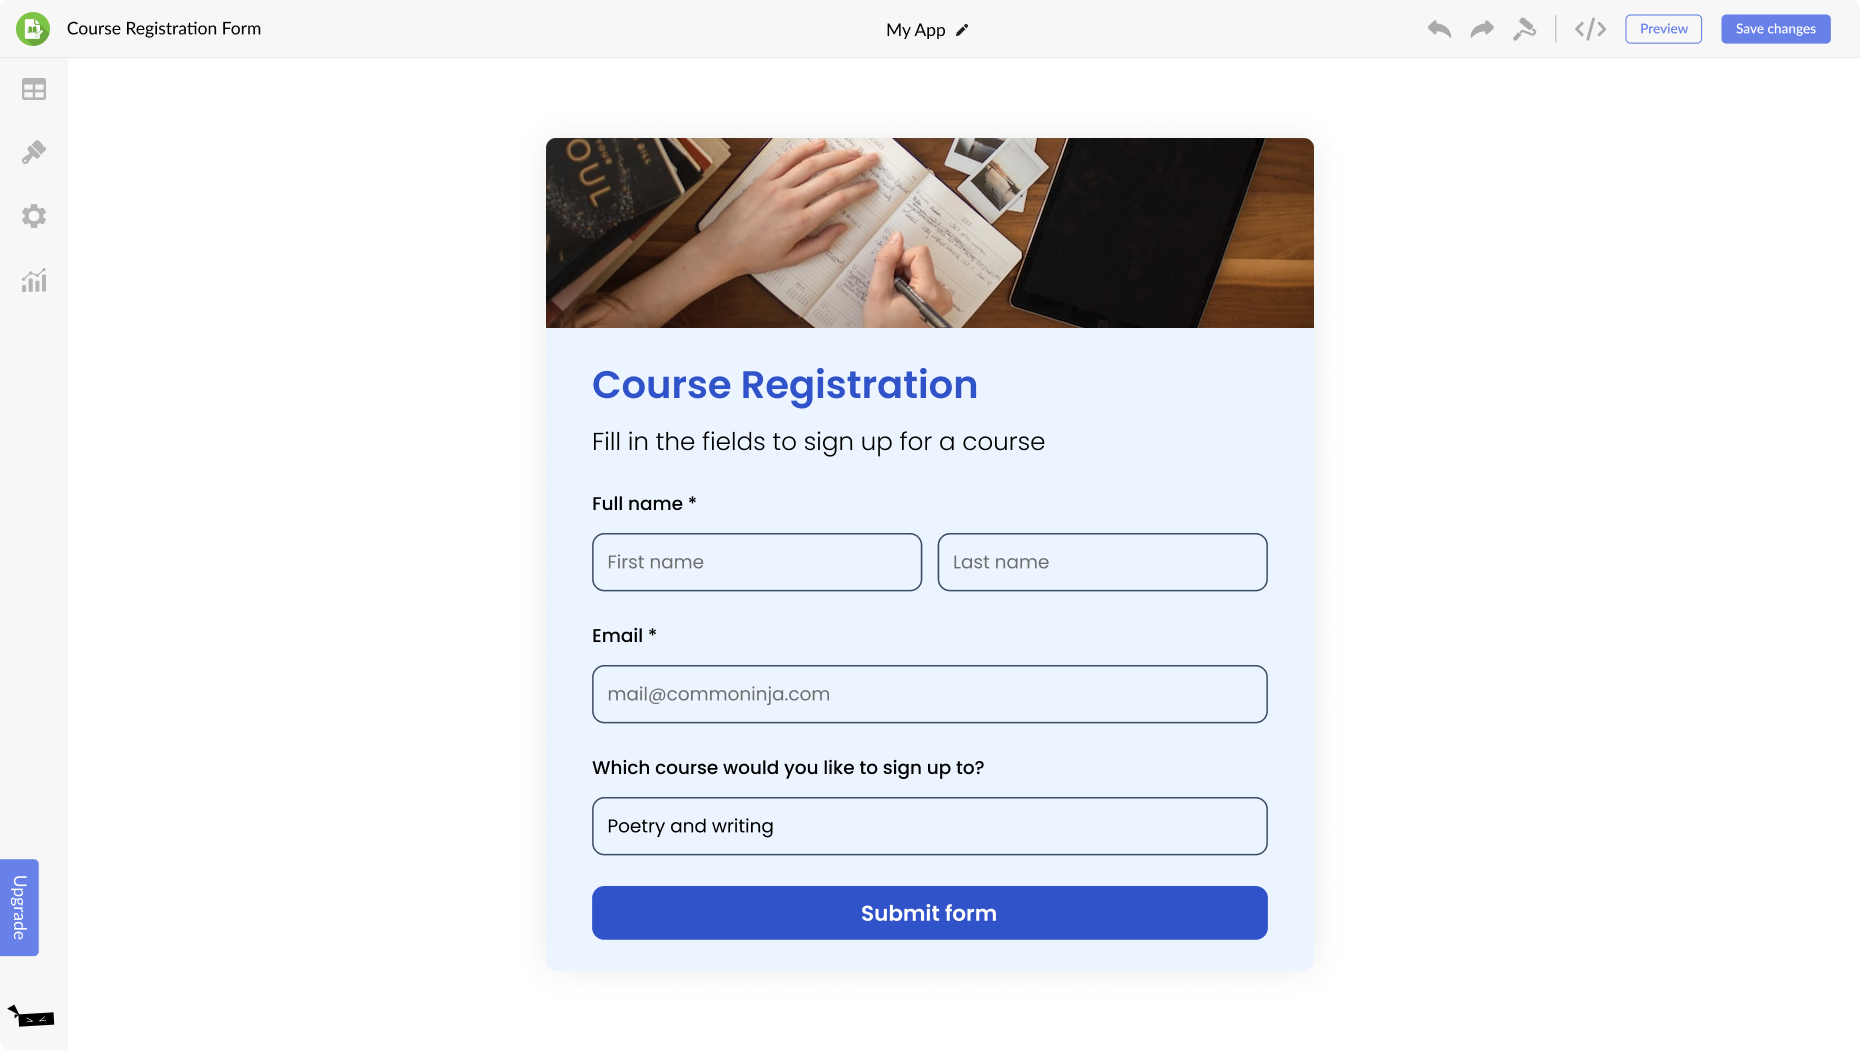 Course Registration Form for ScoreApp